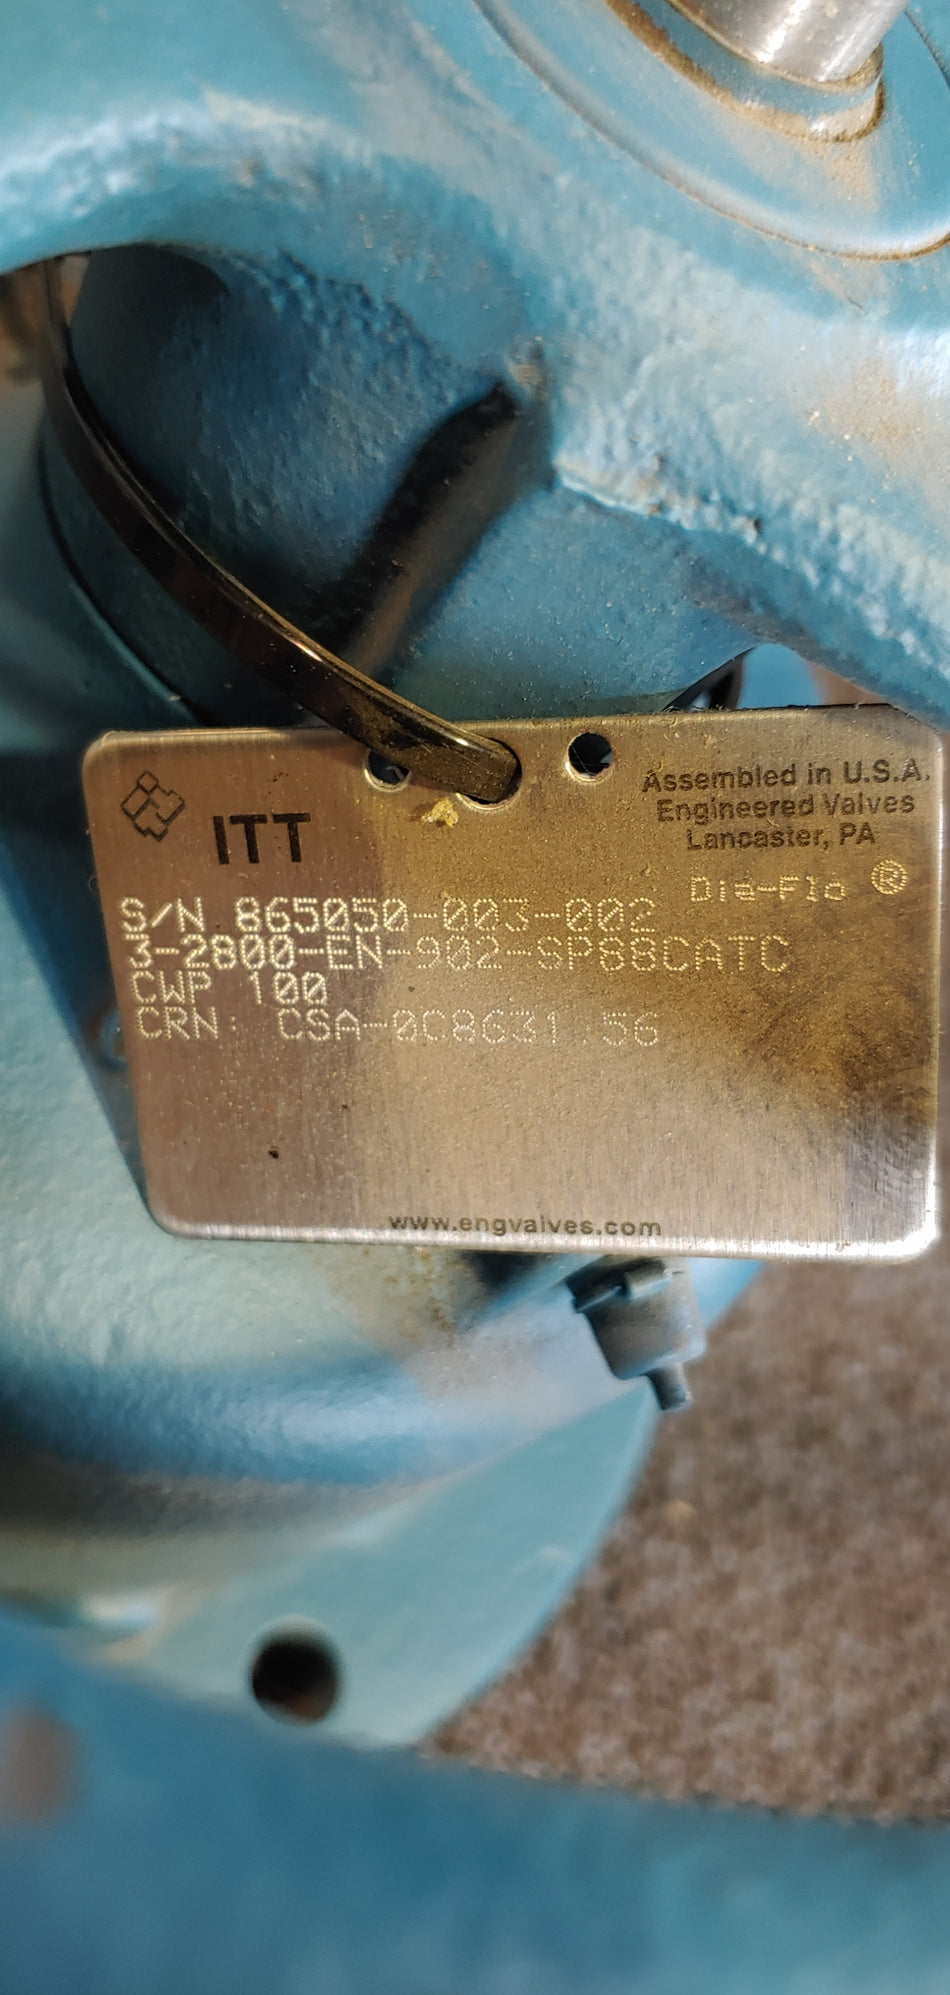 ITT 3" valve (Handle assembly only) 3-2800-EN-902SP88CATC